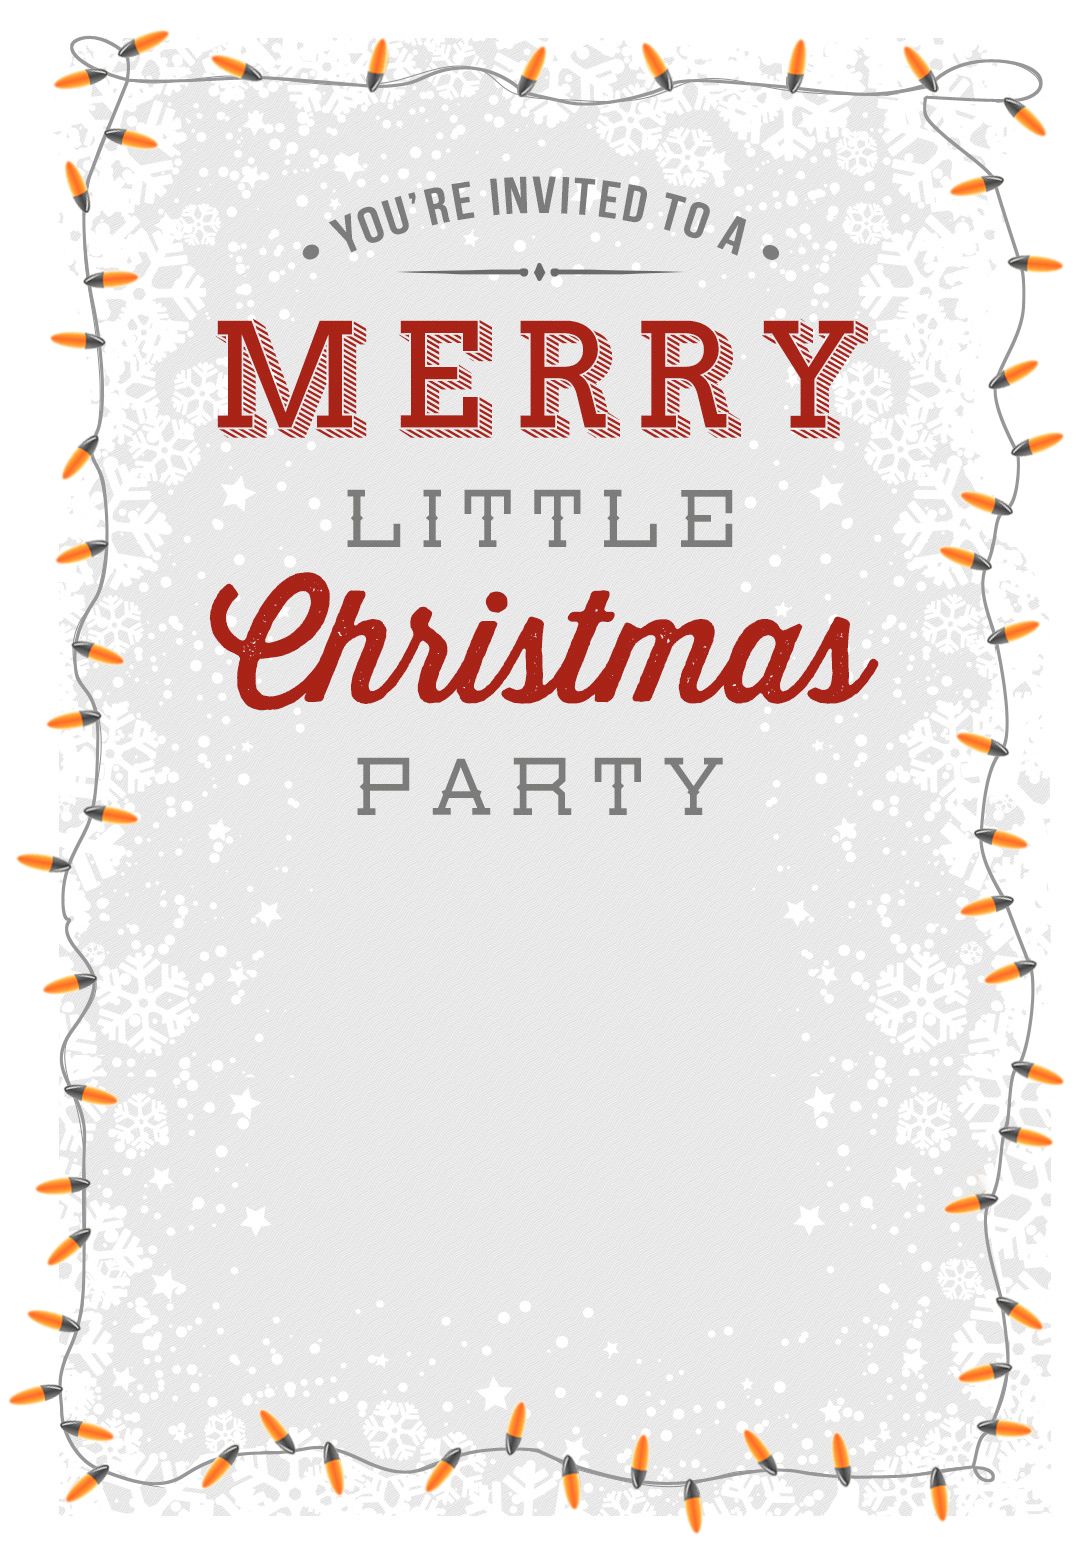 Free Printable Christmas Party Invitations_15930